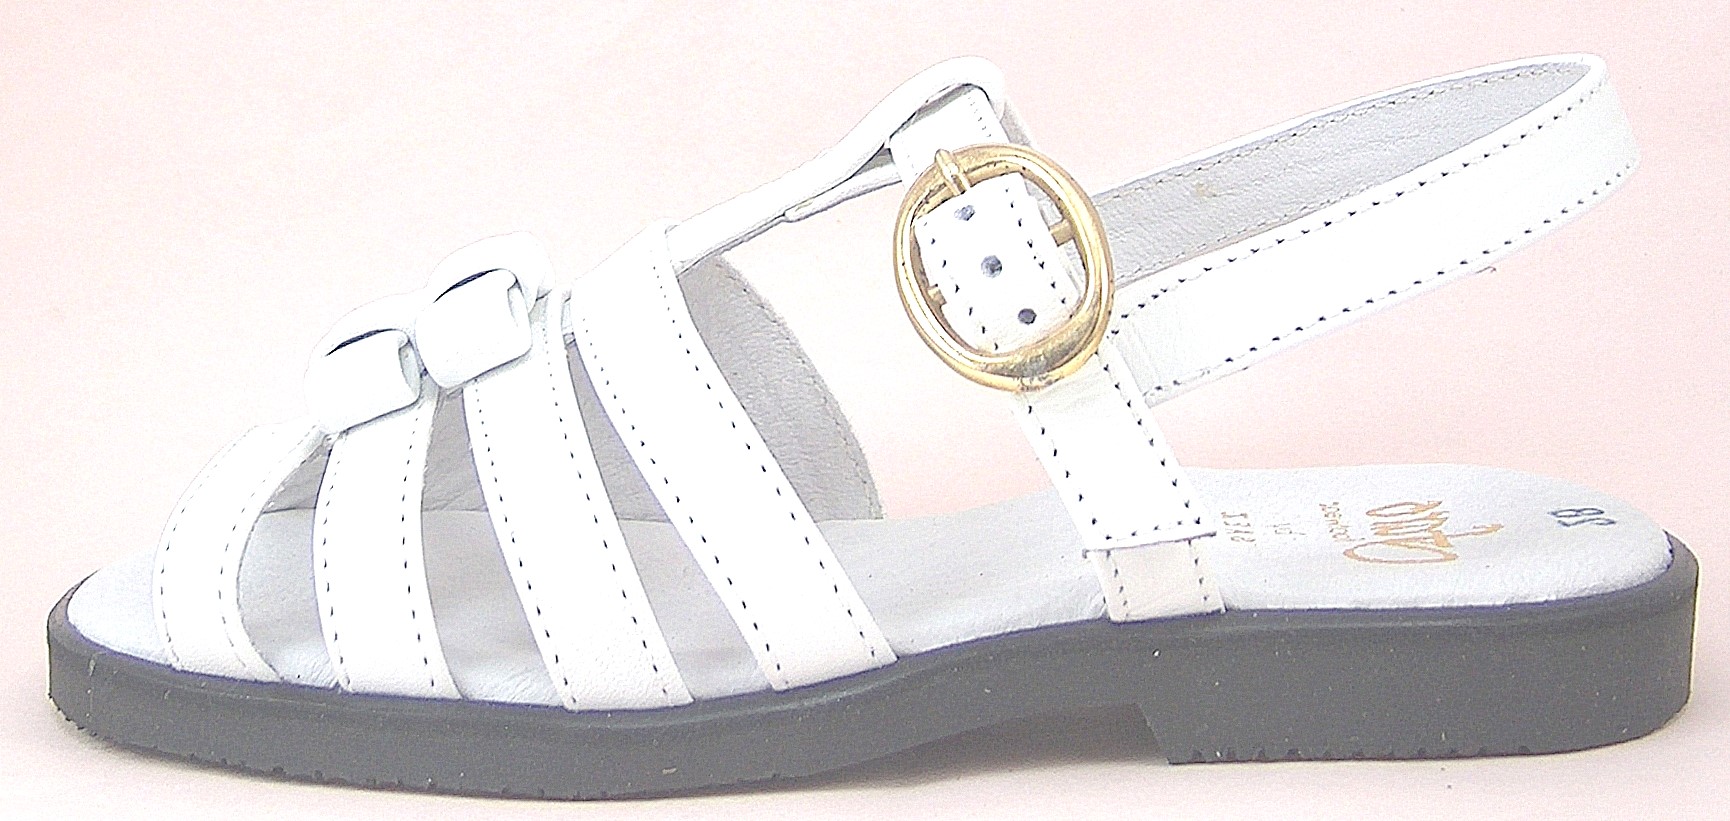 FARO F-3233 - White Bow Dress Sandals